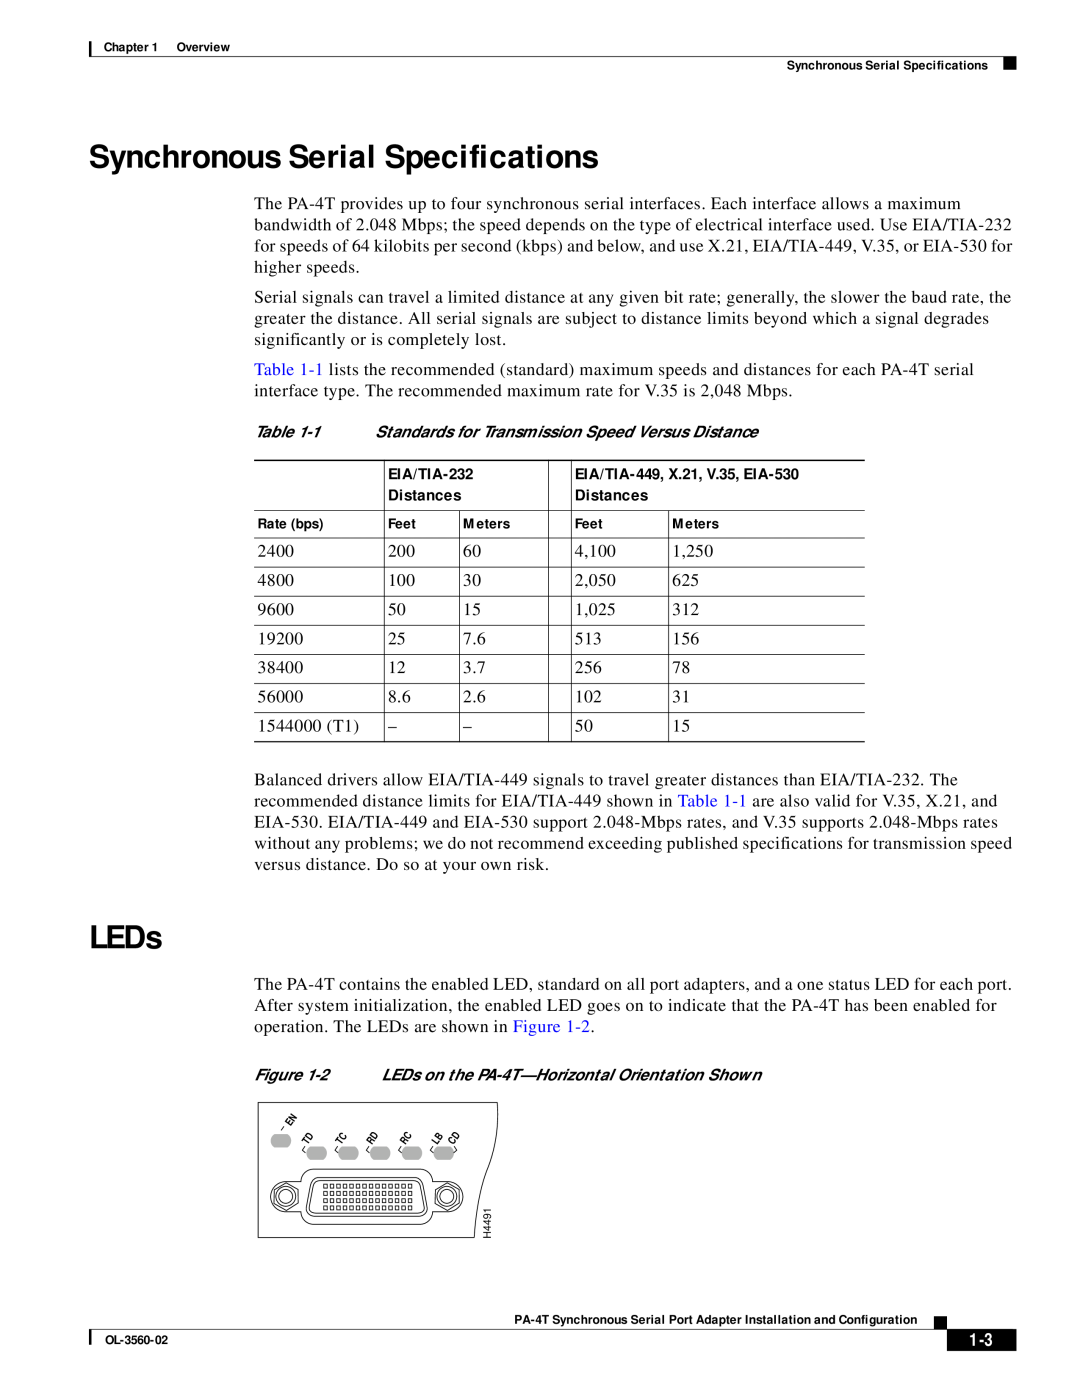 Cisco Systems OL-3560-02 Synchronous Serial Specifications, LEDs, EIA/TIA-232, EIA/TIA-449, X.21, V.35, EIA-530, Distances 